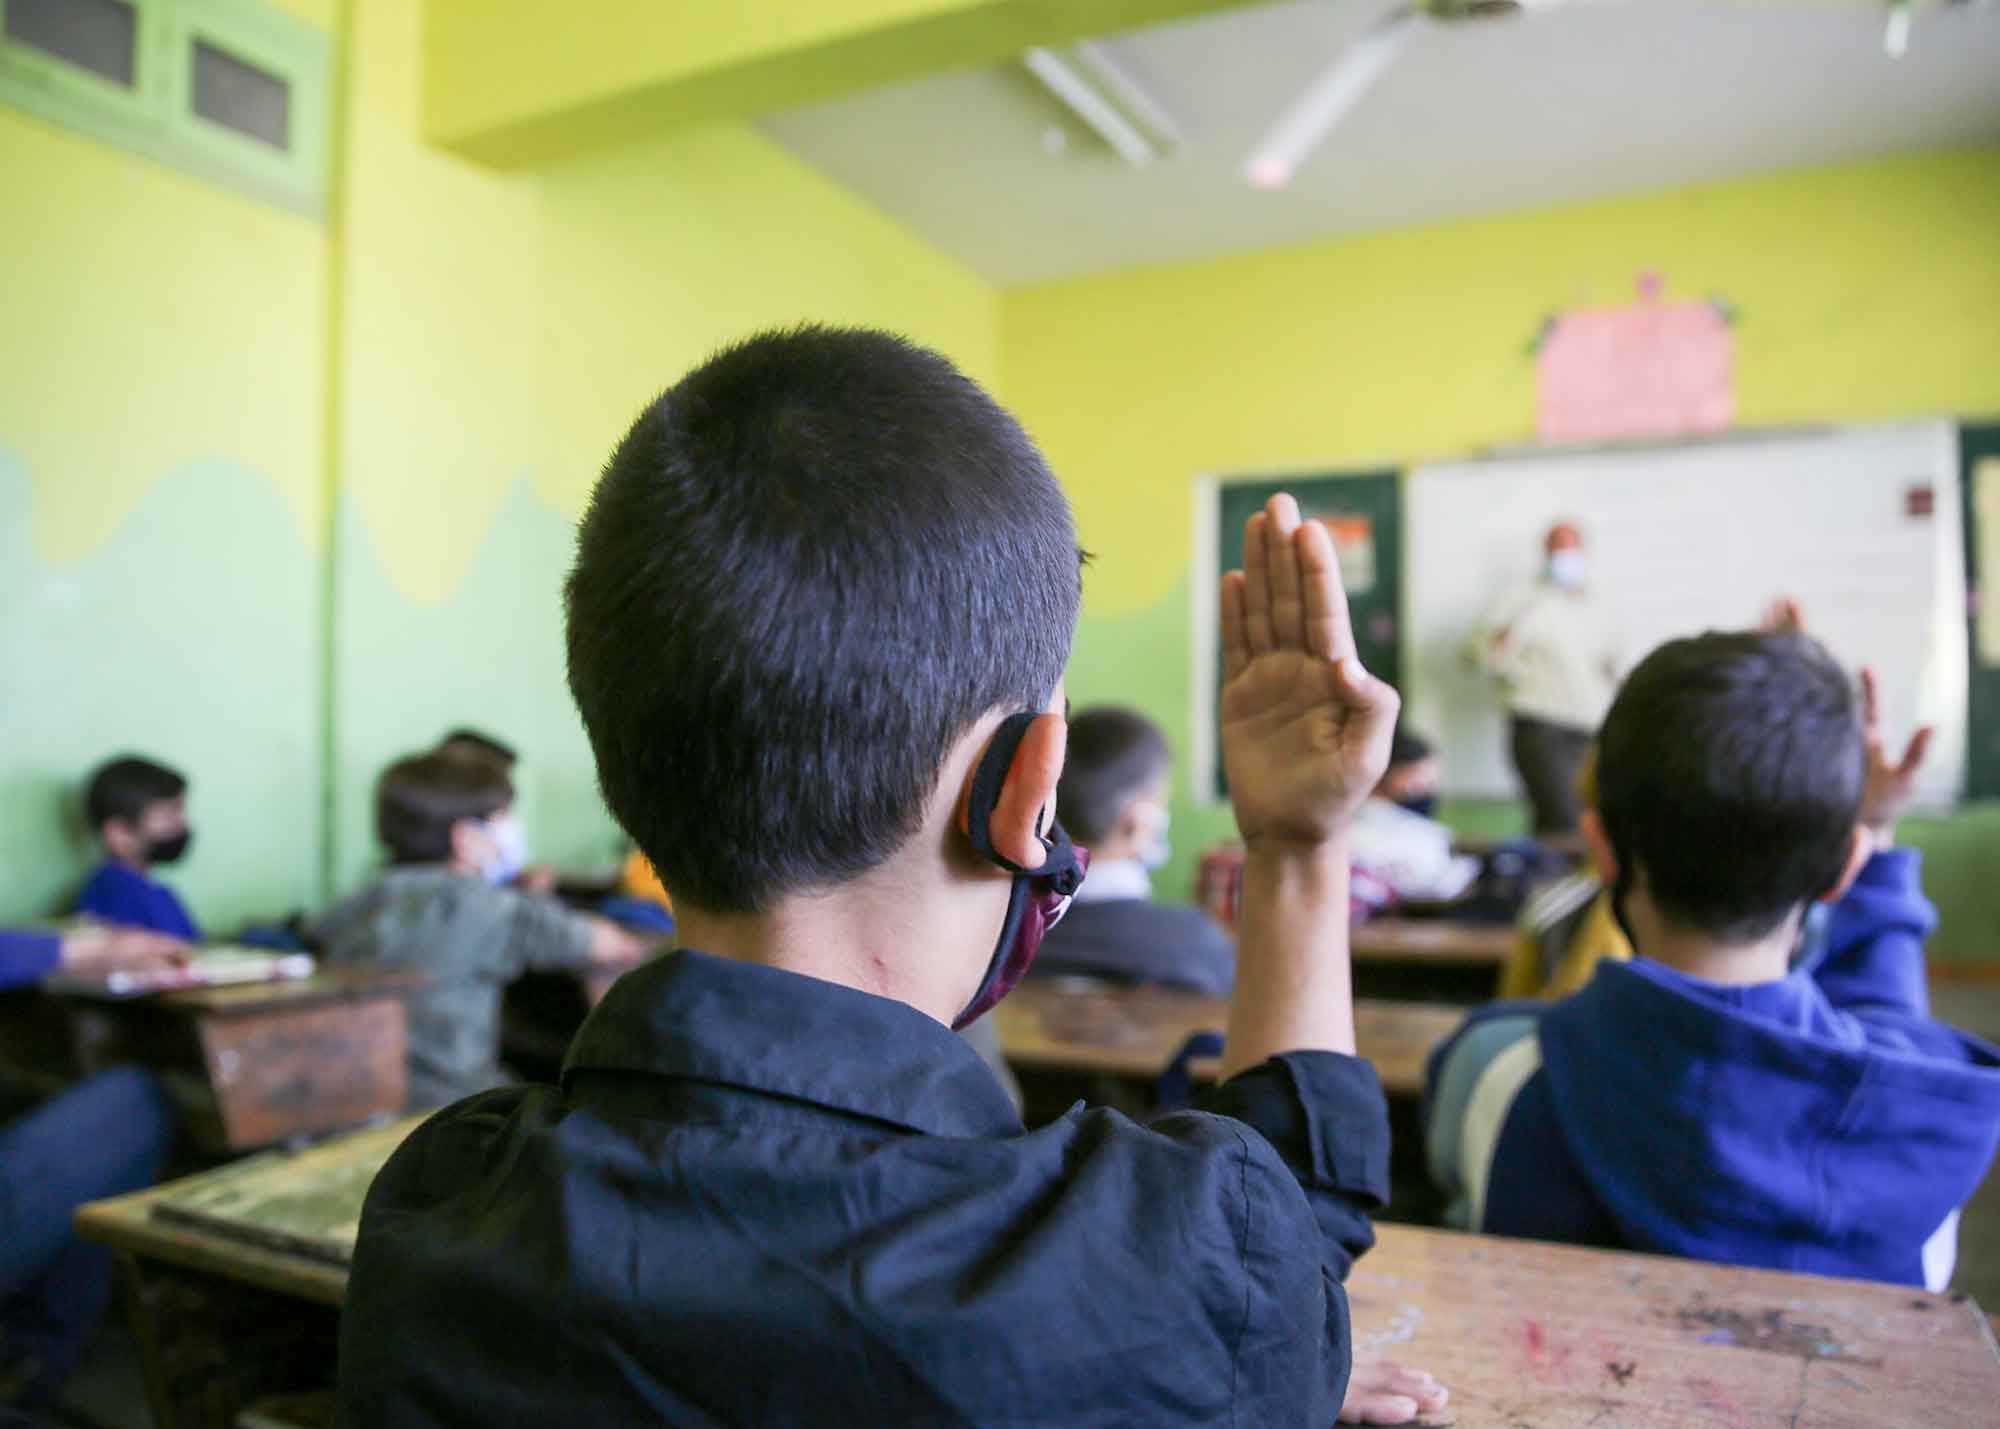 A child raise his hand in Violet's school in northwest of Syria / Idlib - Syria